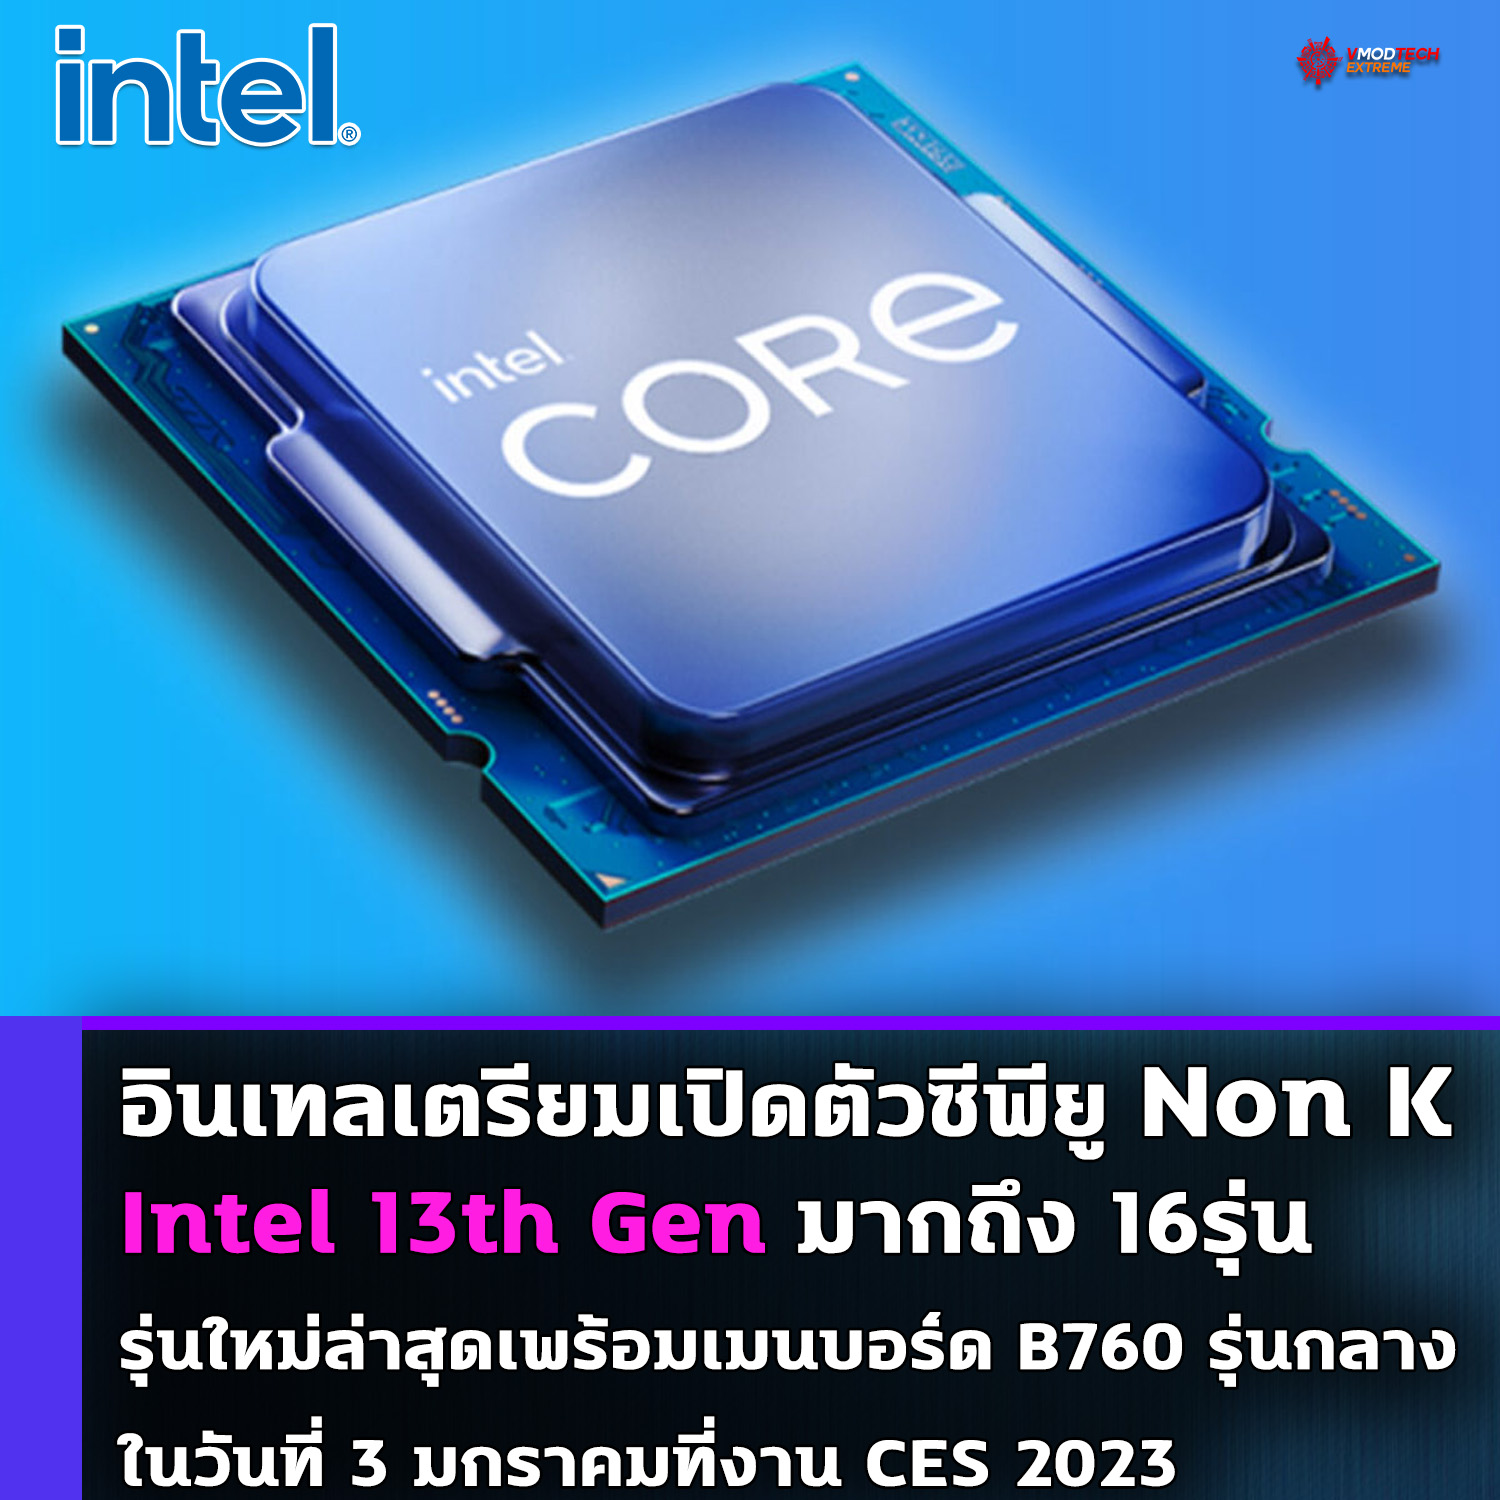 intel 13th gen non k ces 2023 Intel เตรียมเปิดตัวซีพียู Intel 13th Gen ในรุ่น non K รุ่นใหม่ล่าสุดพร้อมเมนบอร์ด B760 รุ่นกลางในวันที่ 3 มกราคมปี 2023